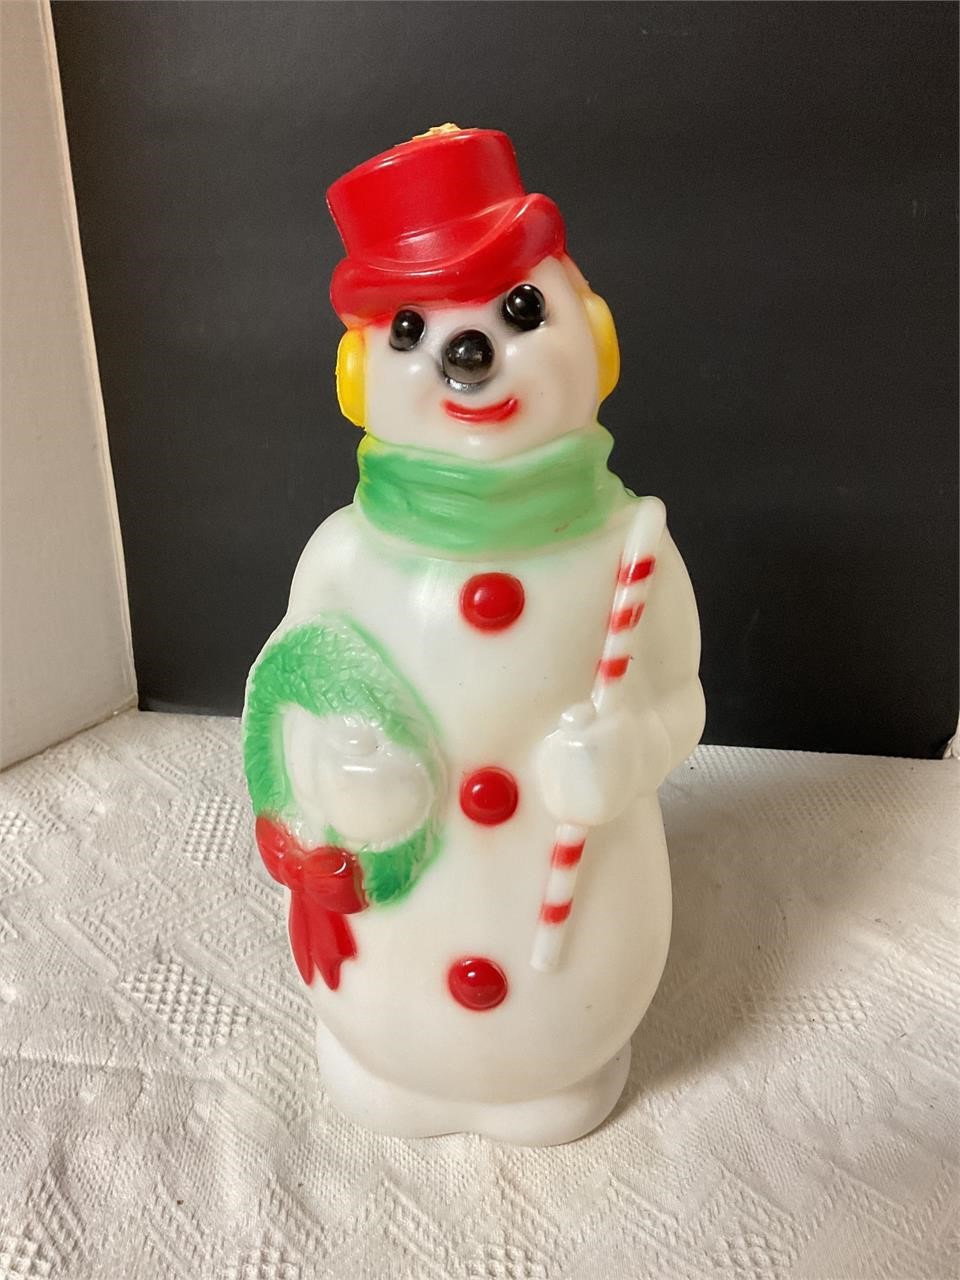 14” tall snowman with light